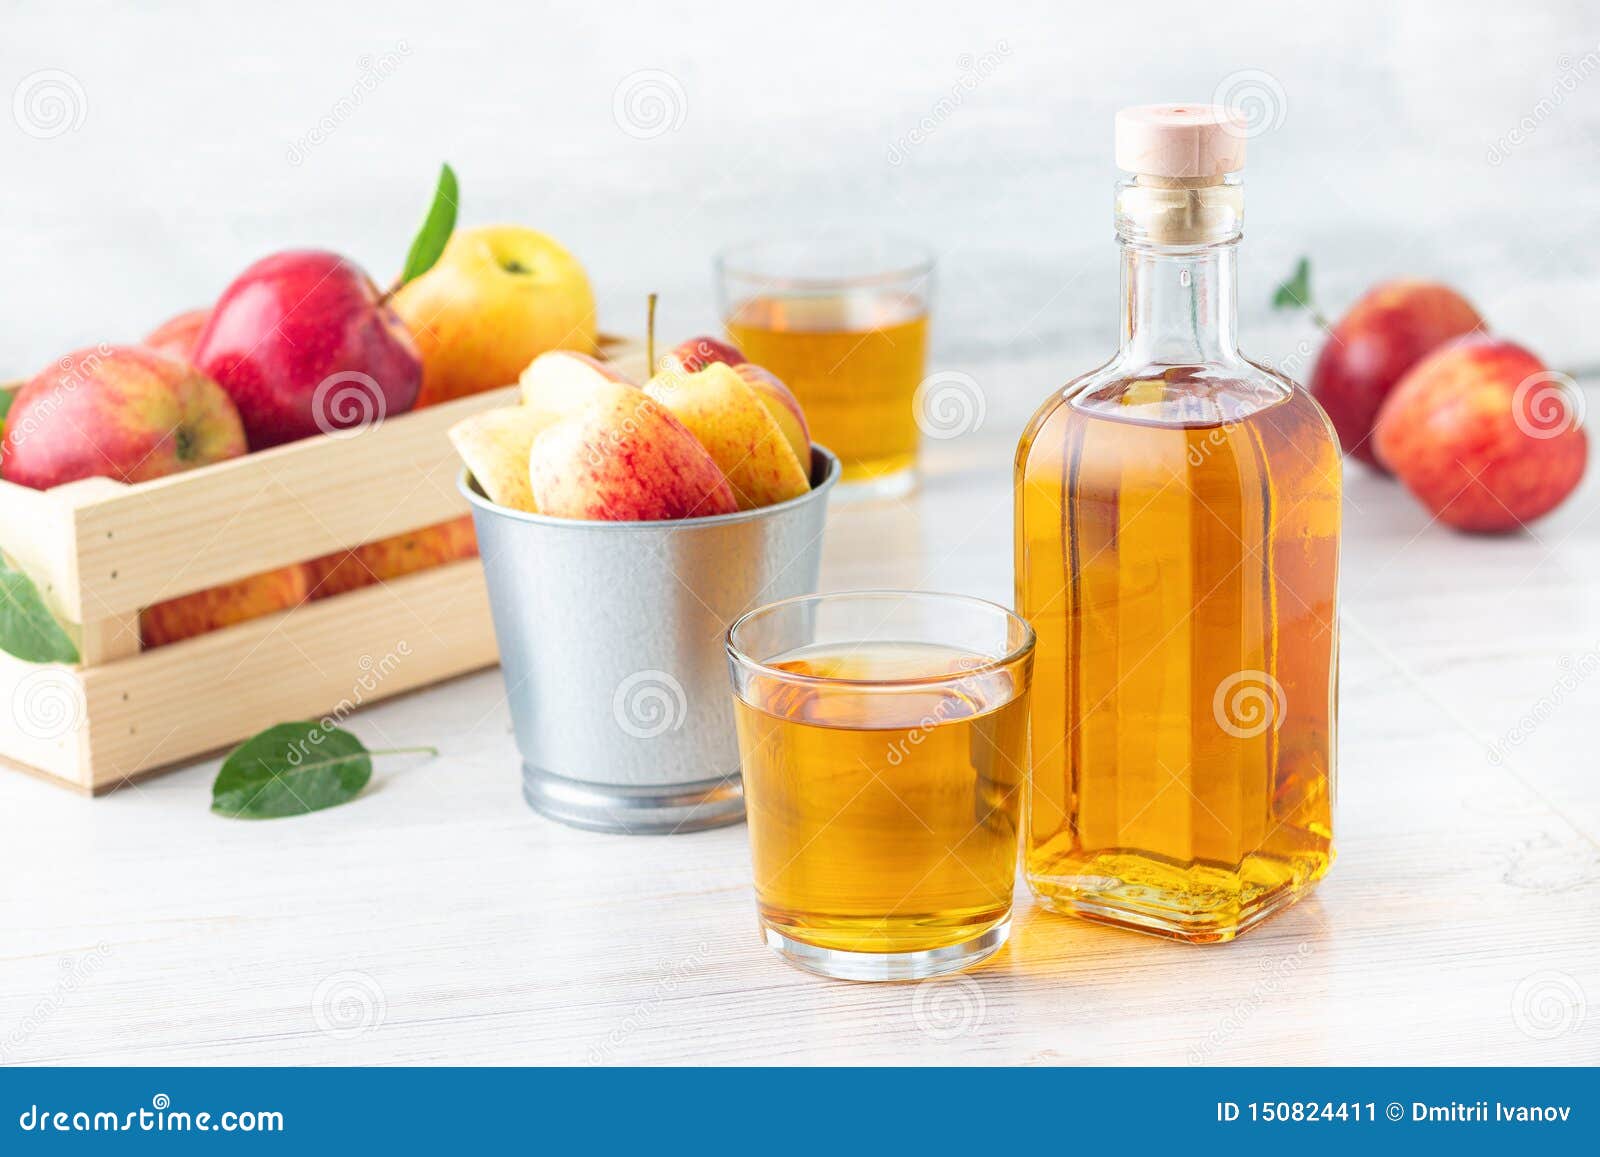 healthy organic food. apple cider vinegar in glass bottle.